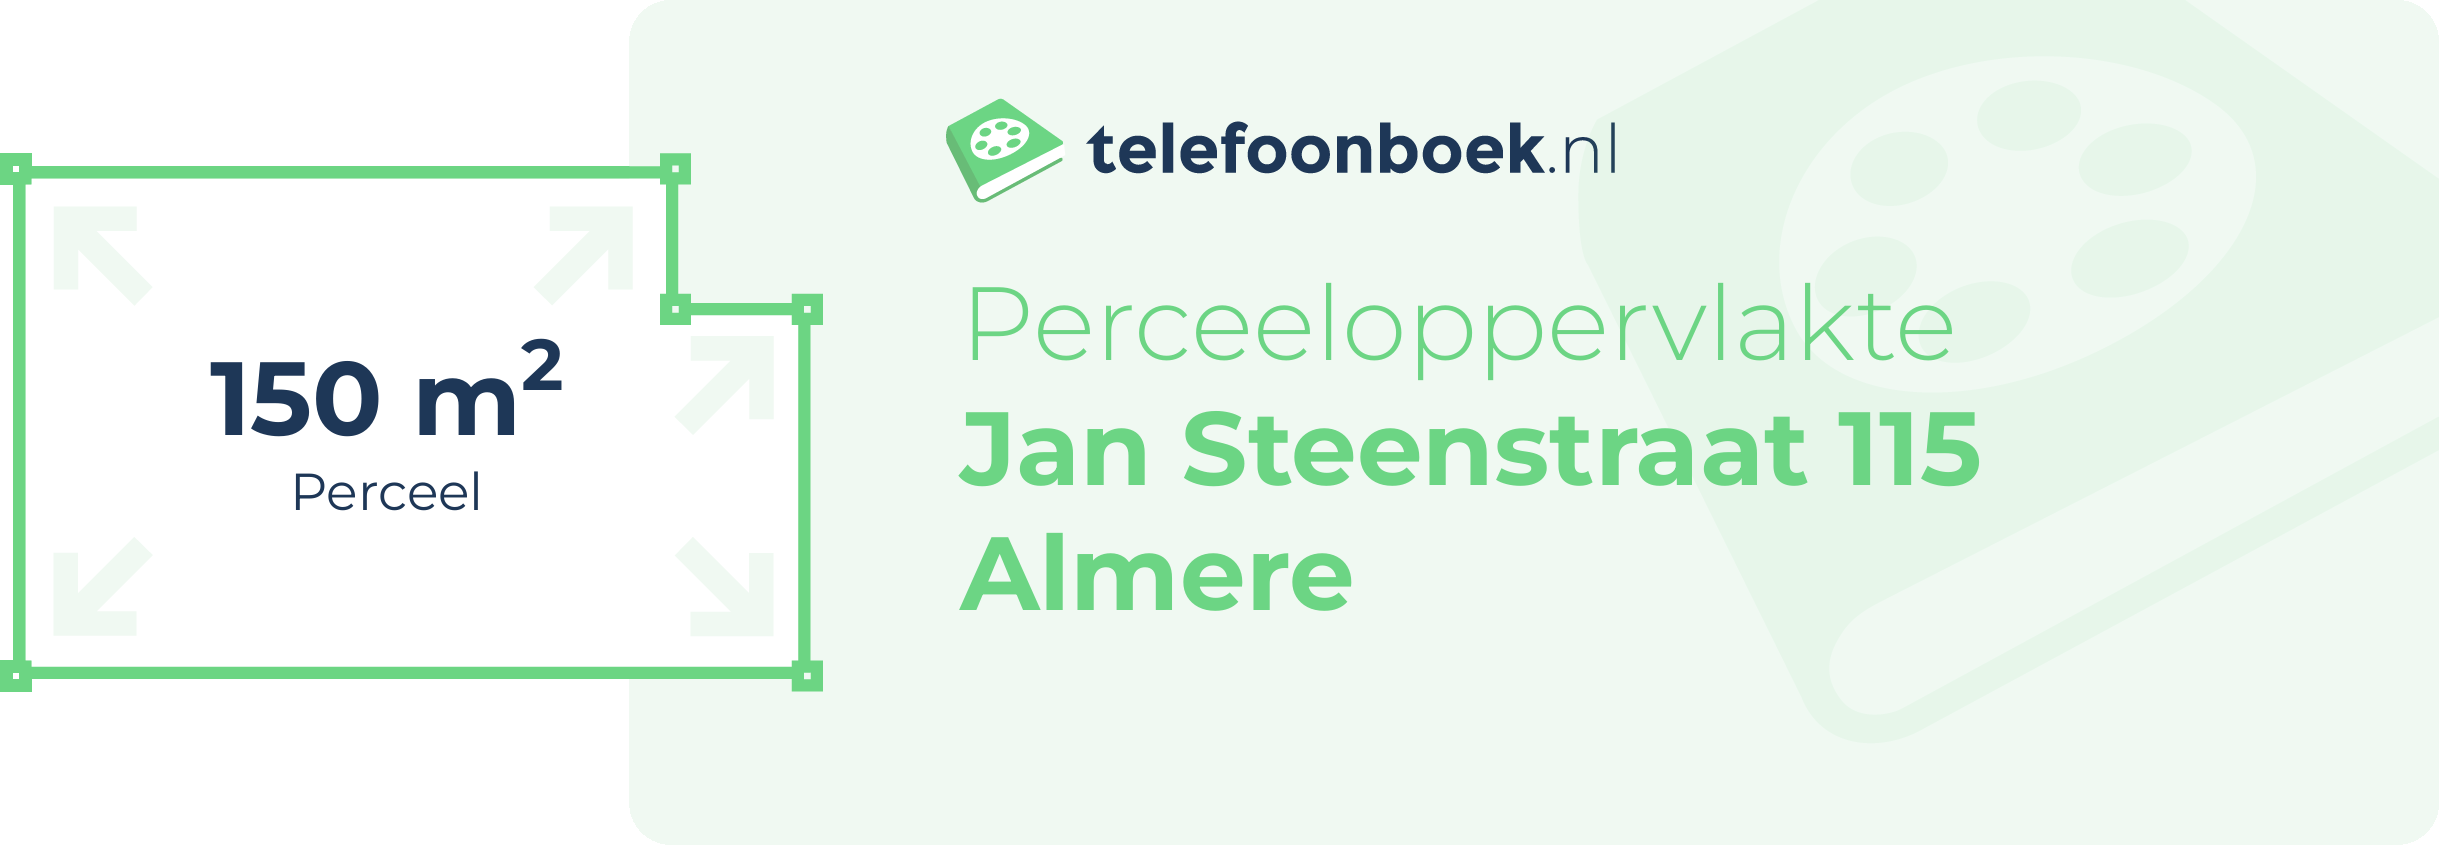 Perceeloppervlakte Jan Steenstraat 115 Almere